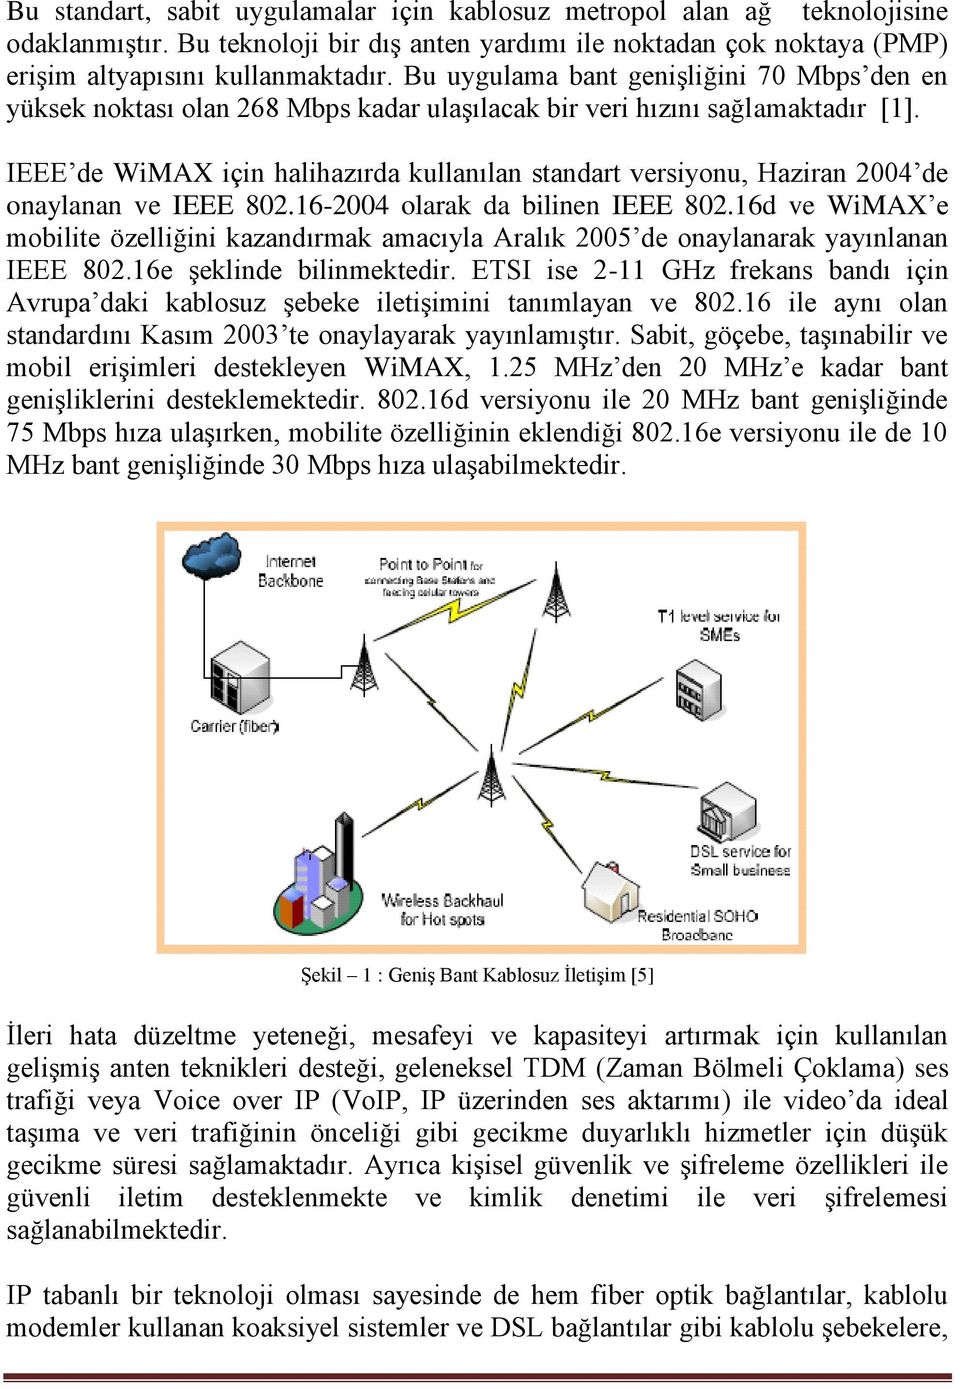 IEEE de WiMAX için halihazırda kullanılan standart versiyonu, Haziran 2004 de onaylanan ve IEEE 802.16-2004 olarak da bilinen IEEE 802.